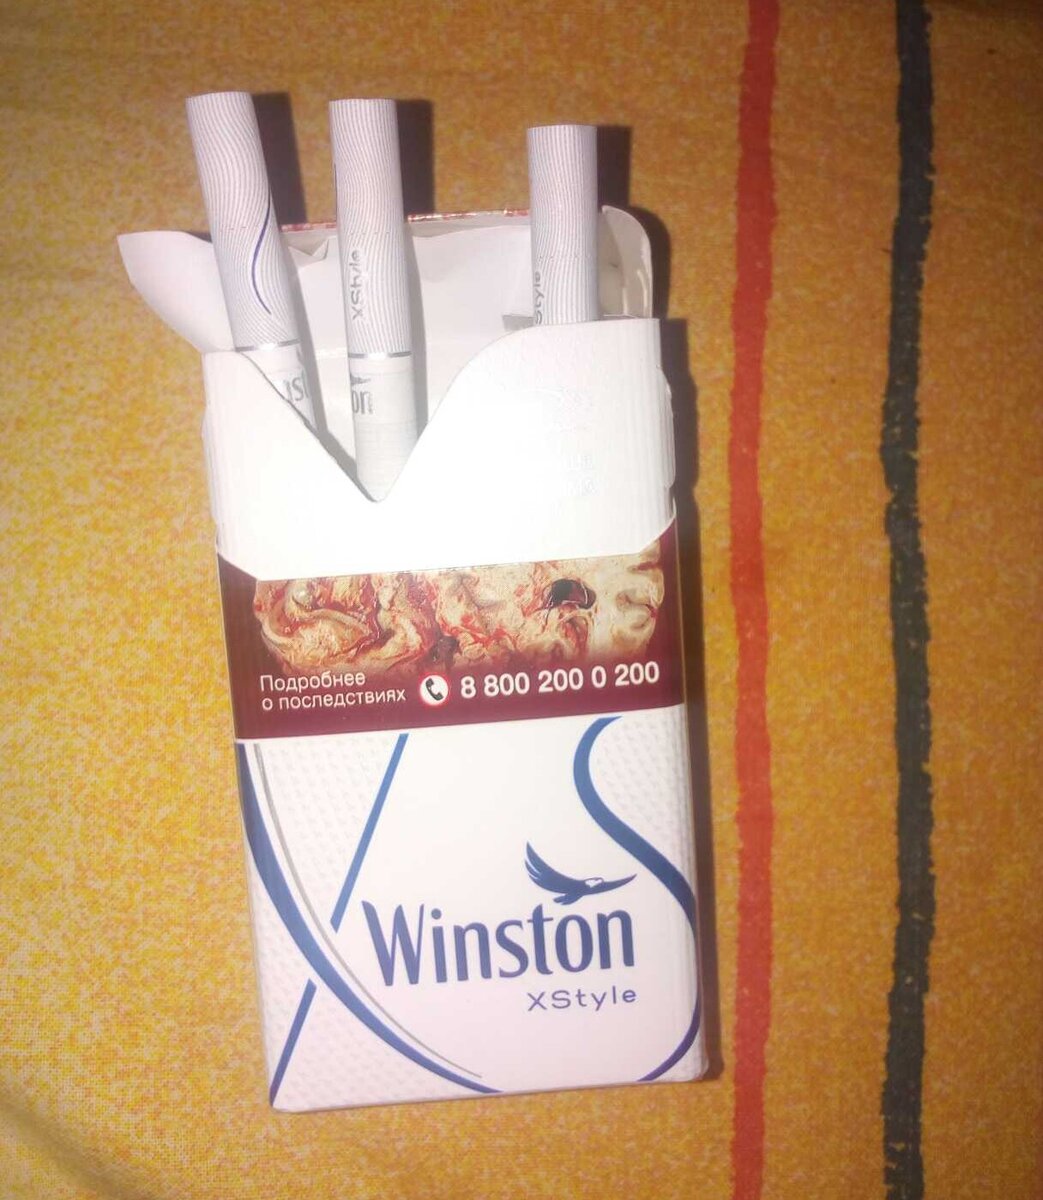 Сигареты Winston с фильтром xstyle Blue